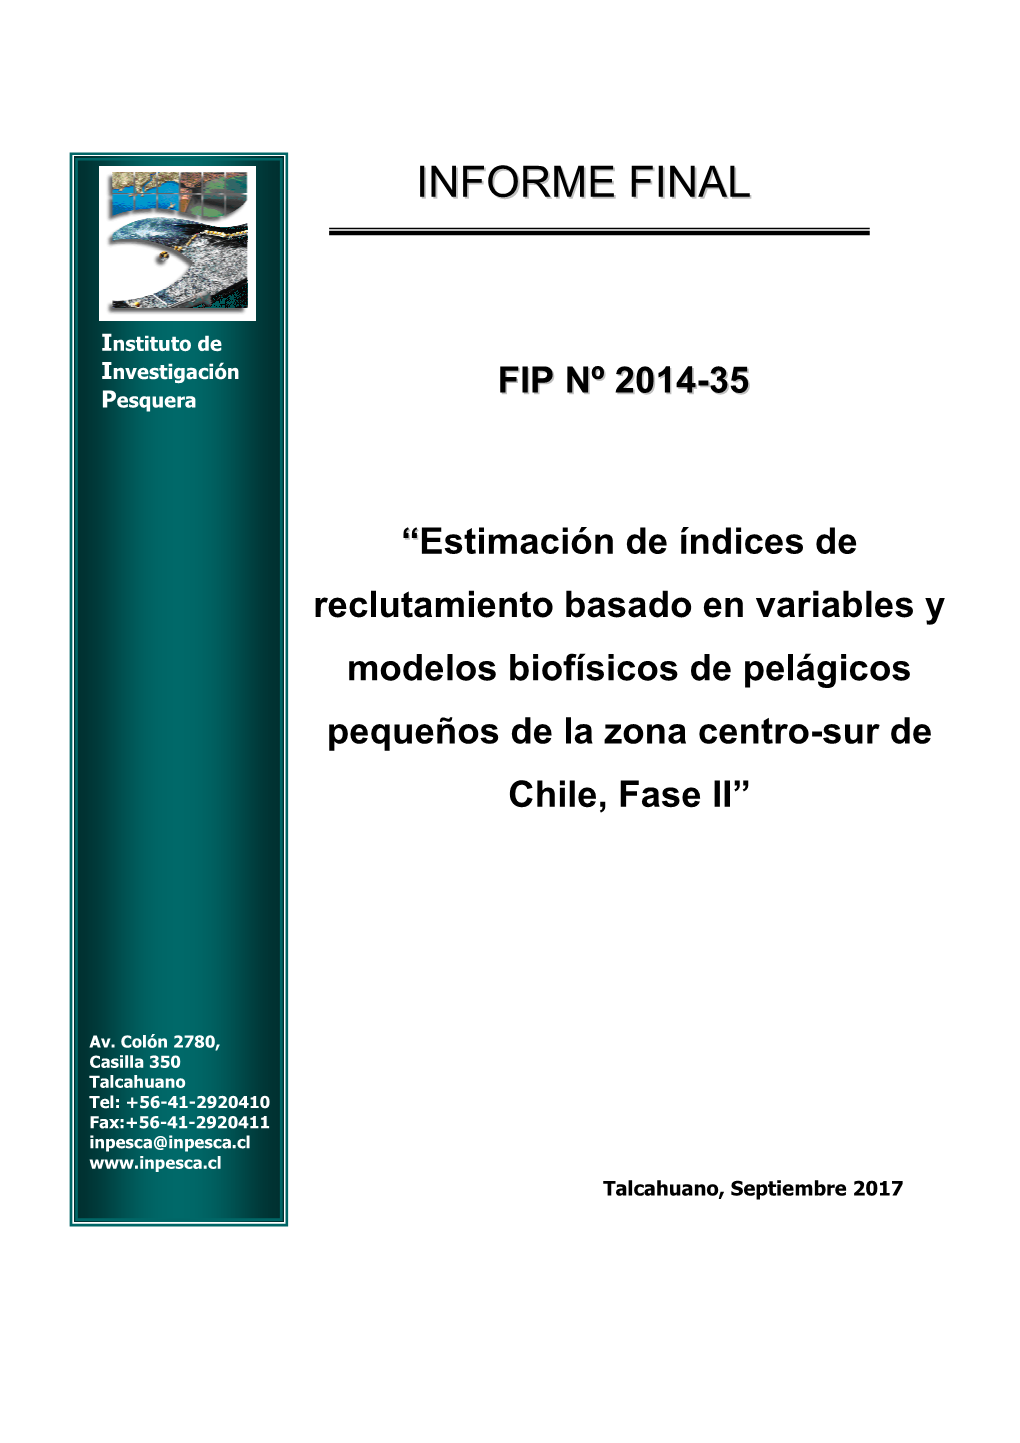 Informe Final FIP 2000-09